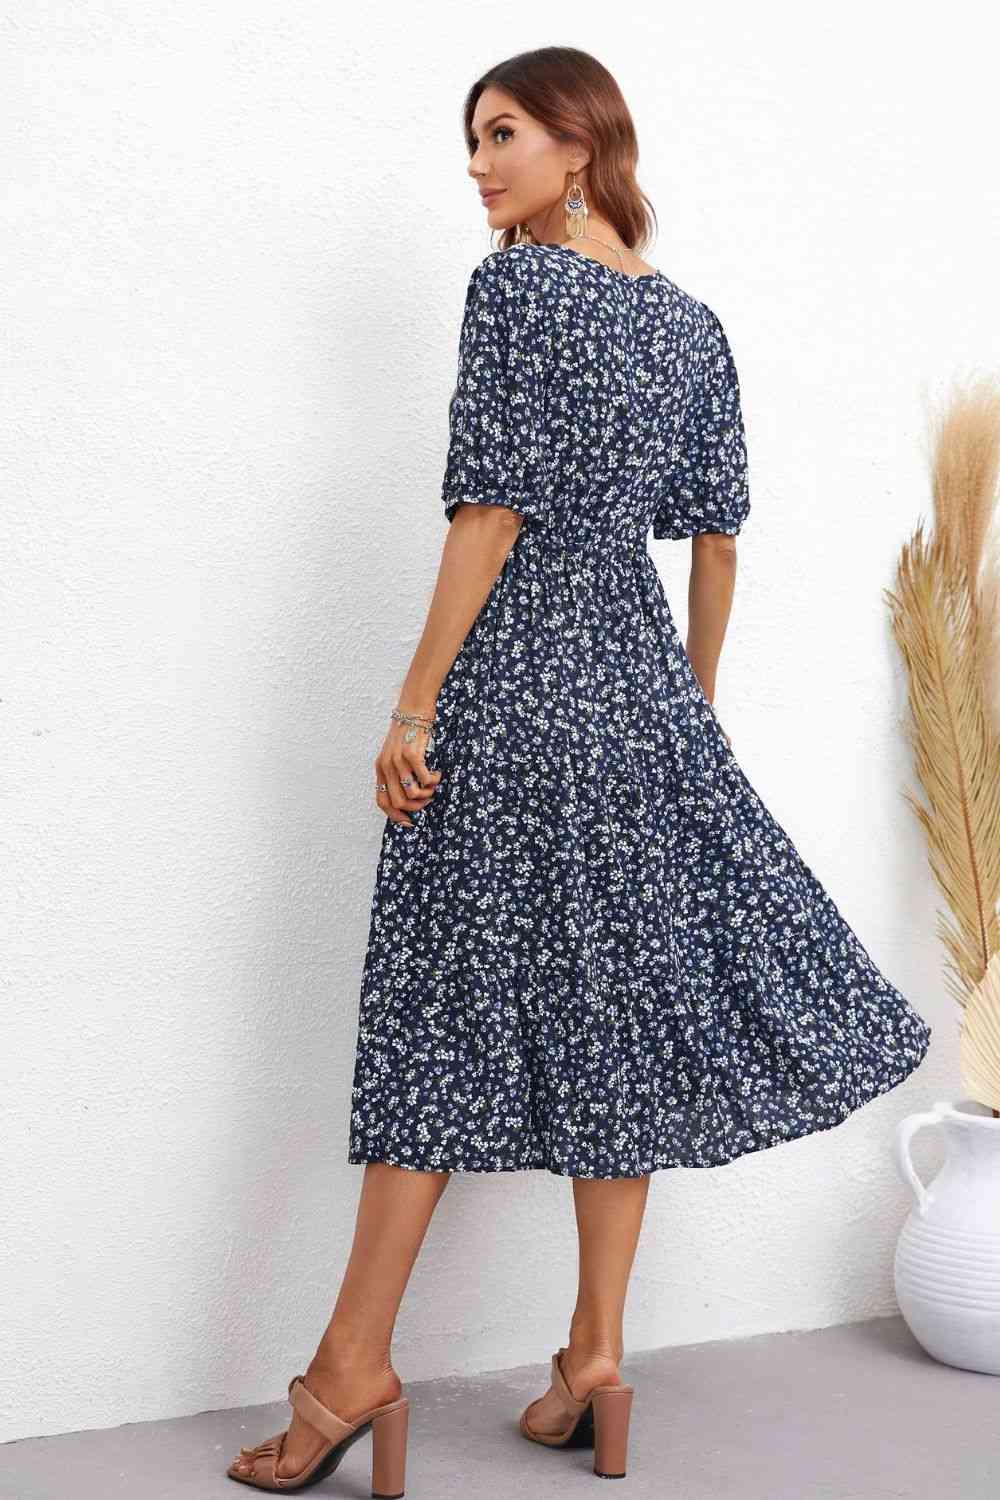 TEEK - Floral Notched Neck Lace Trim Dress DRESS TEEK Trend   